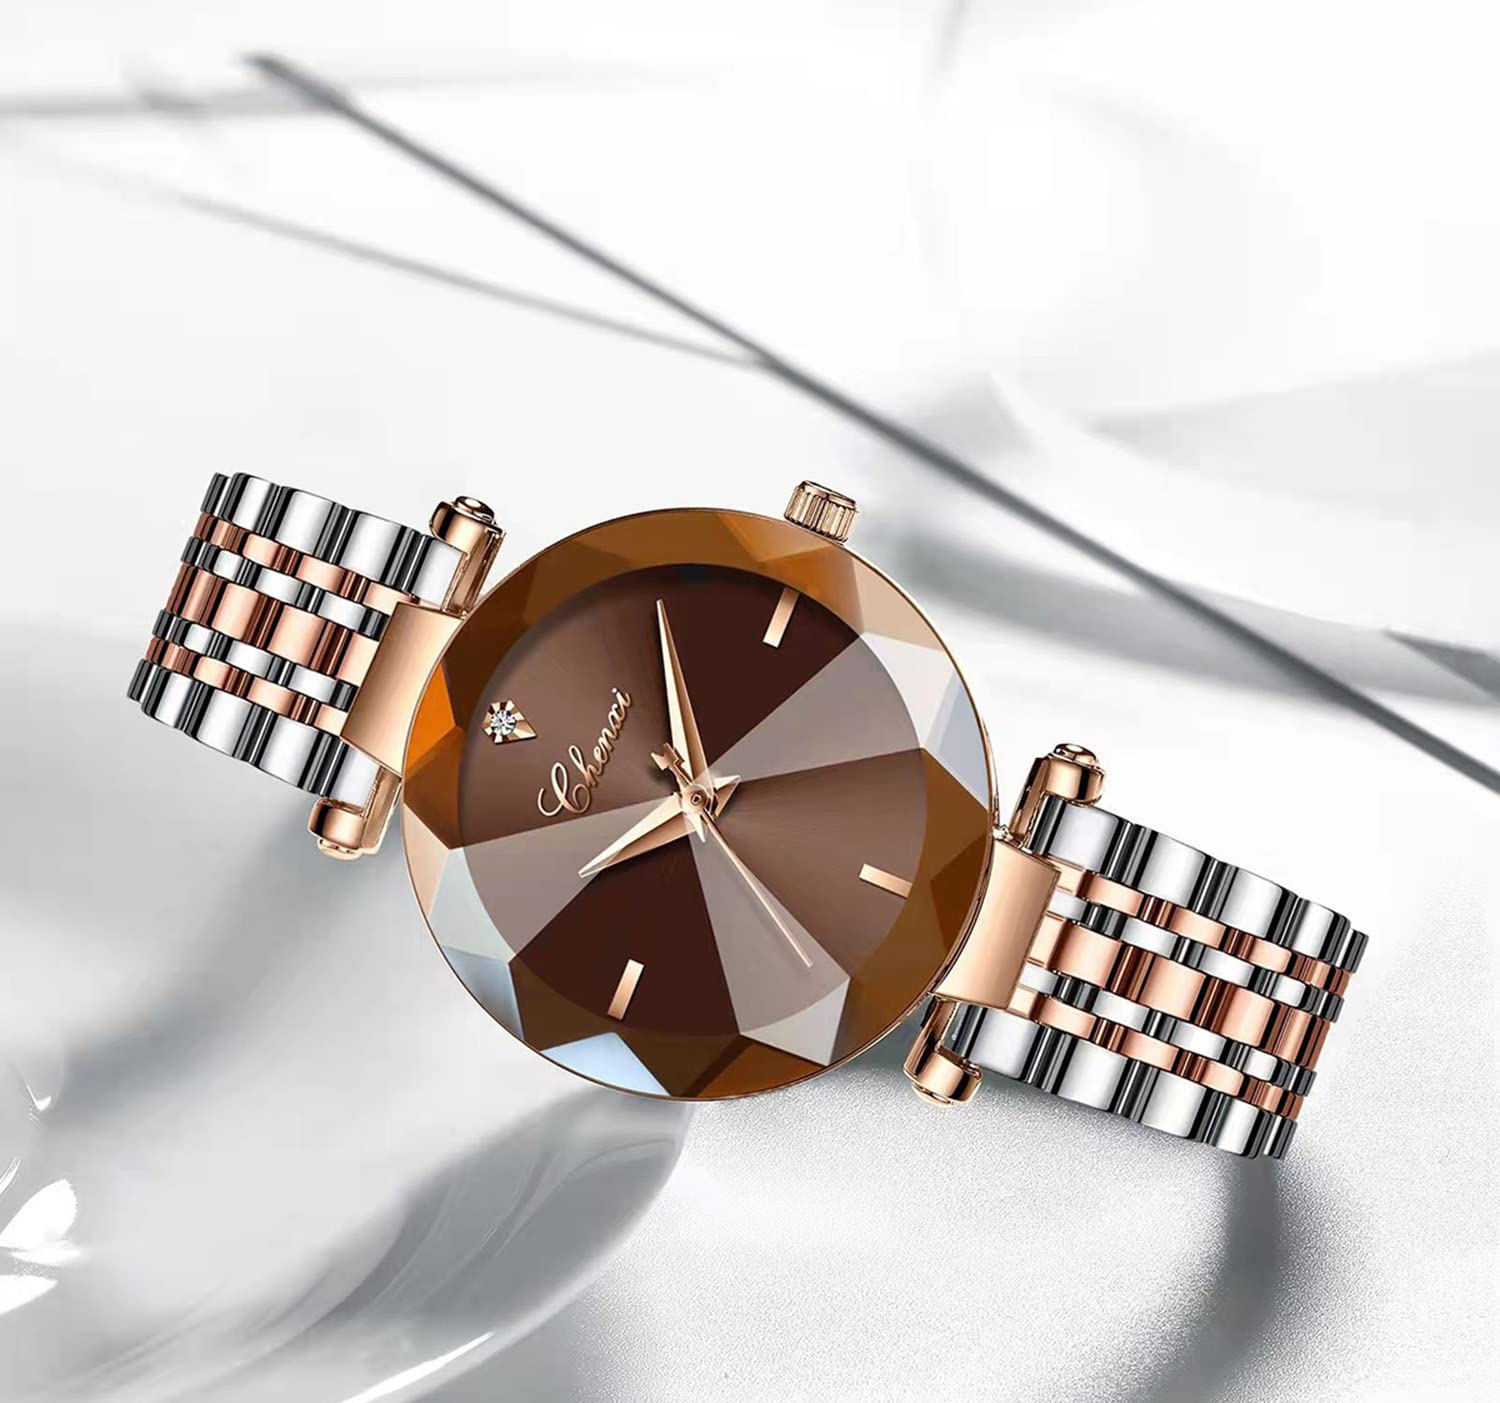 BESTKANG Watches for Women Analog Quartz Watch Fashion 3D Dial Stainless Stee Watches Girls Ladies Wrist Watch